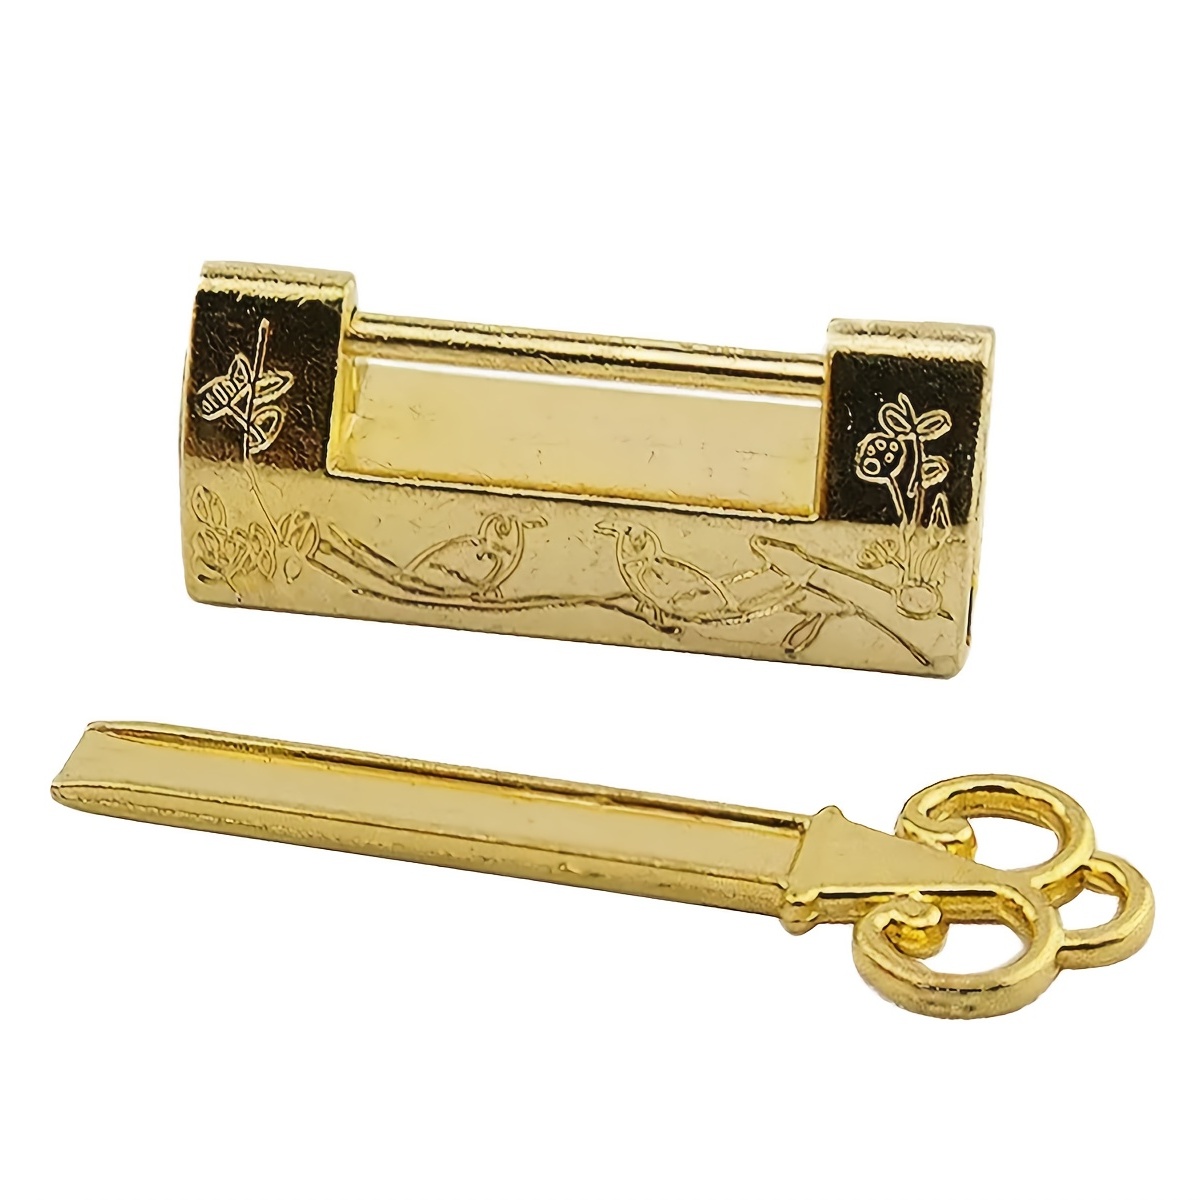 16 unique vintage antique keys lot small lock key warded collection